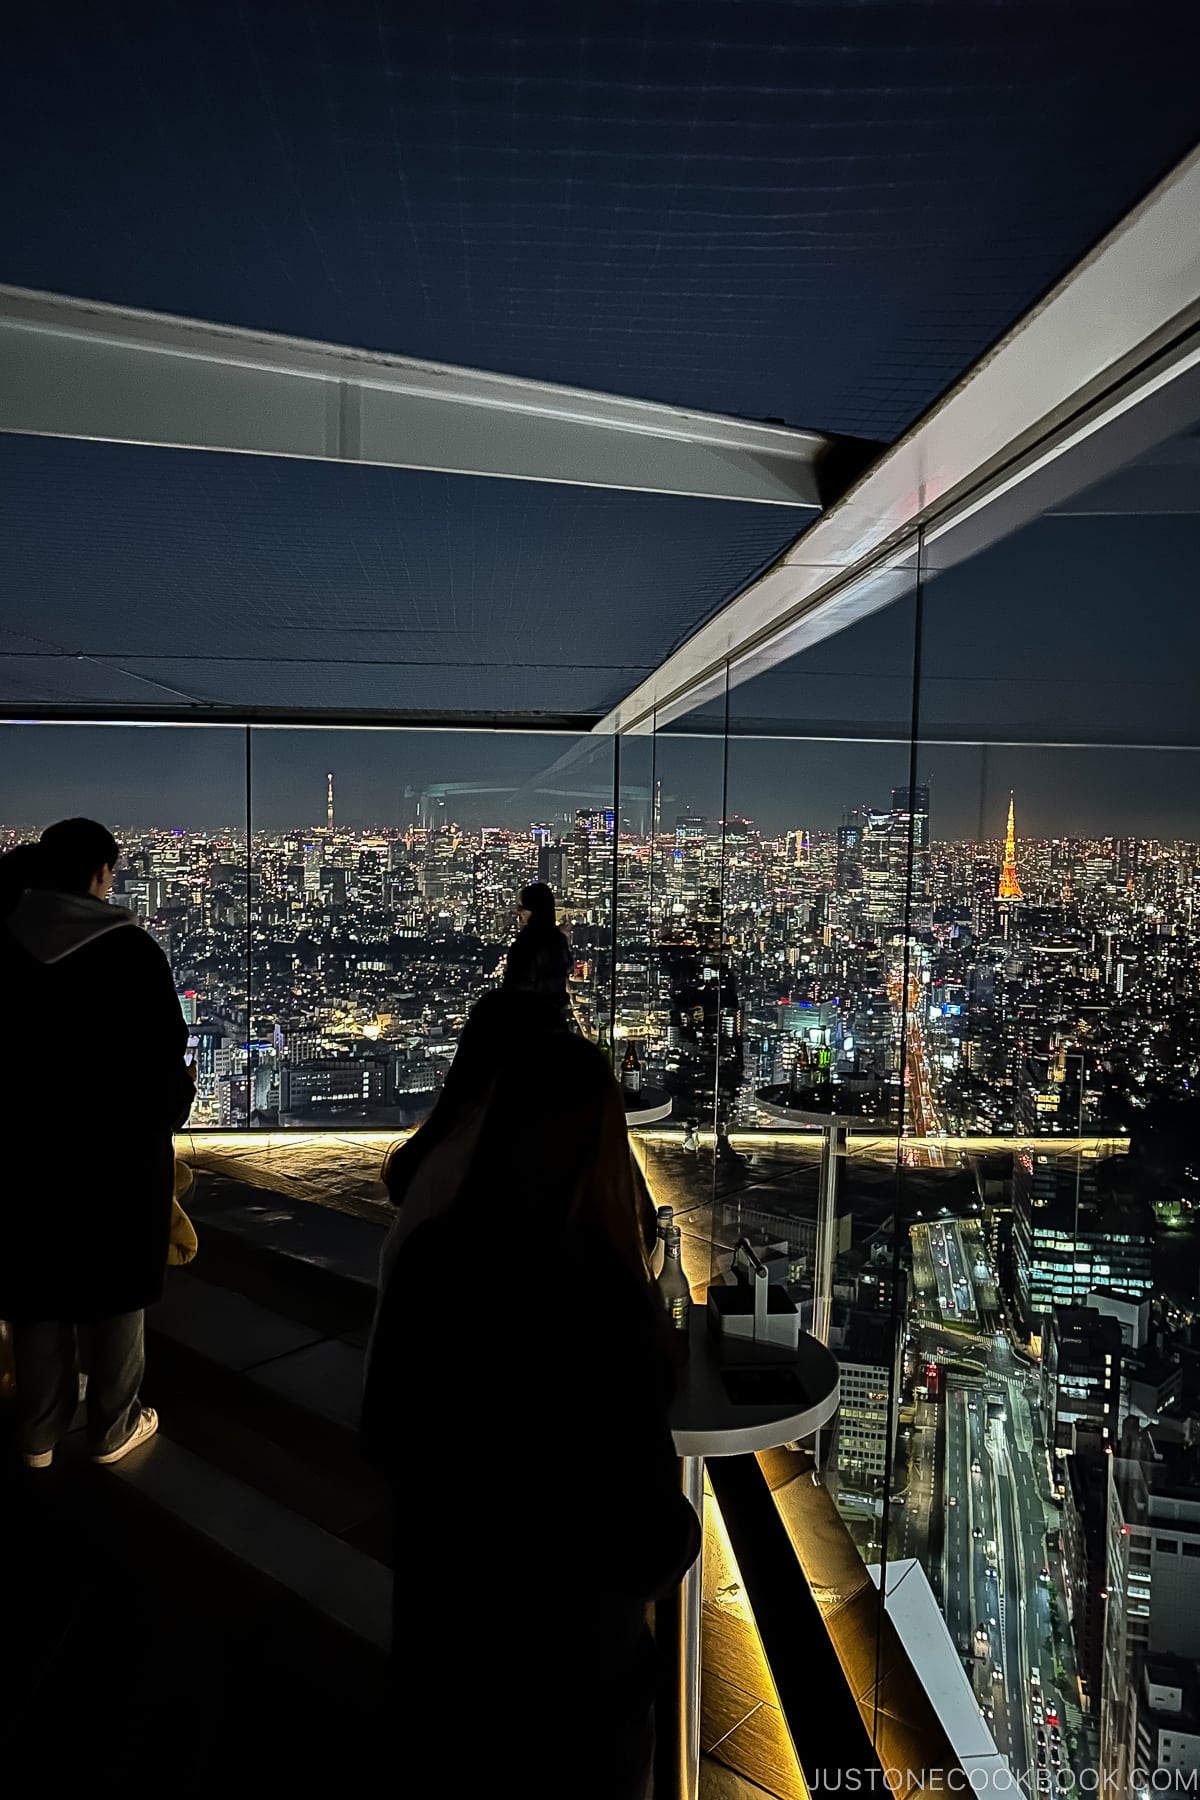 The Roof Shibuya Sky bar observation area